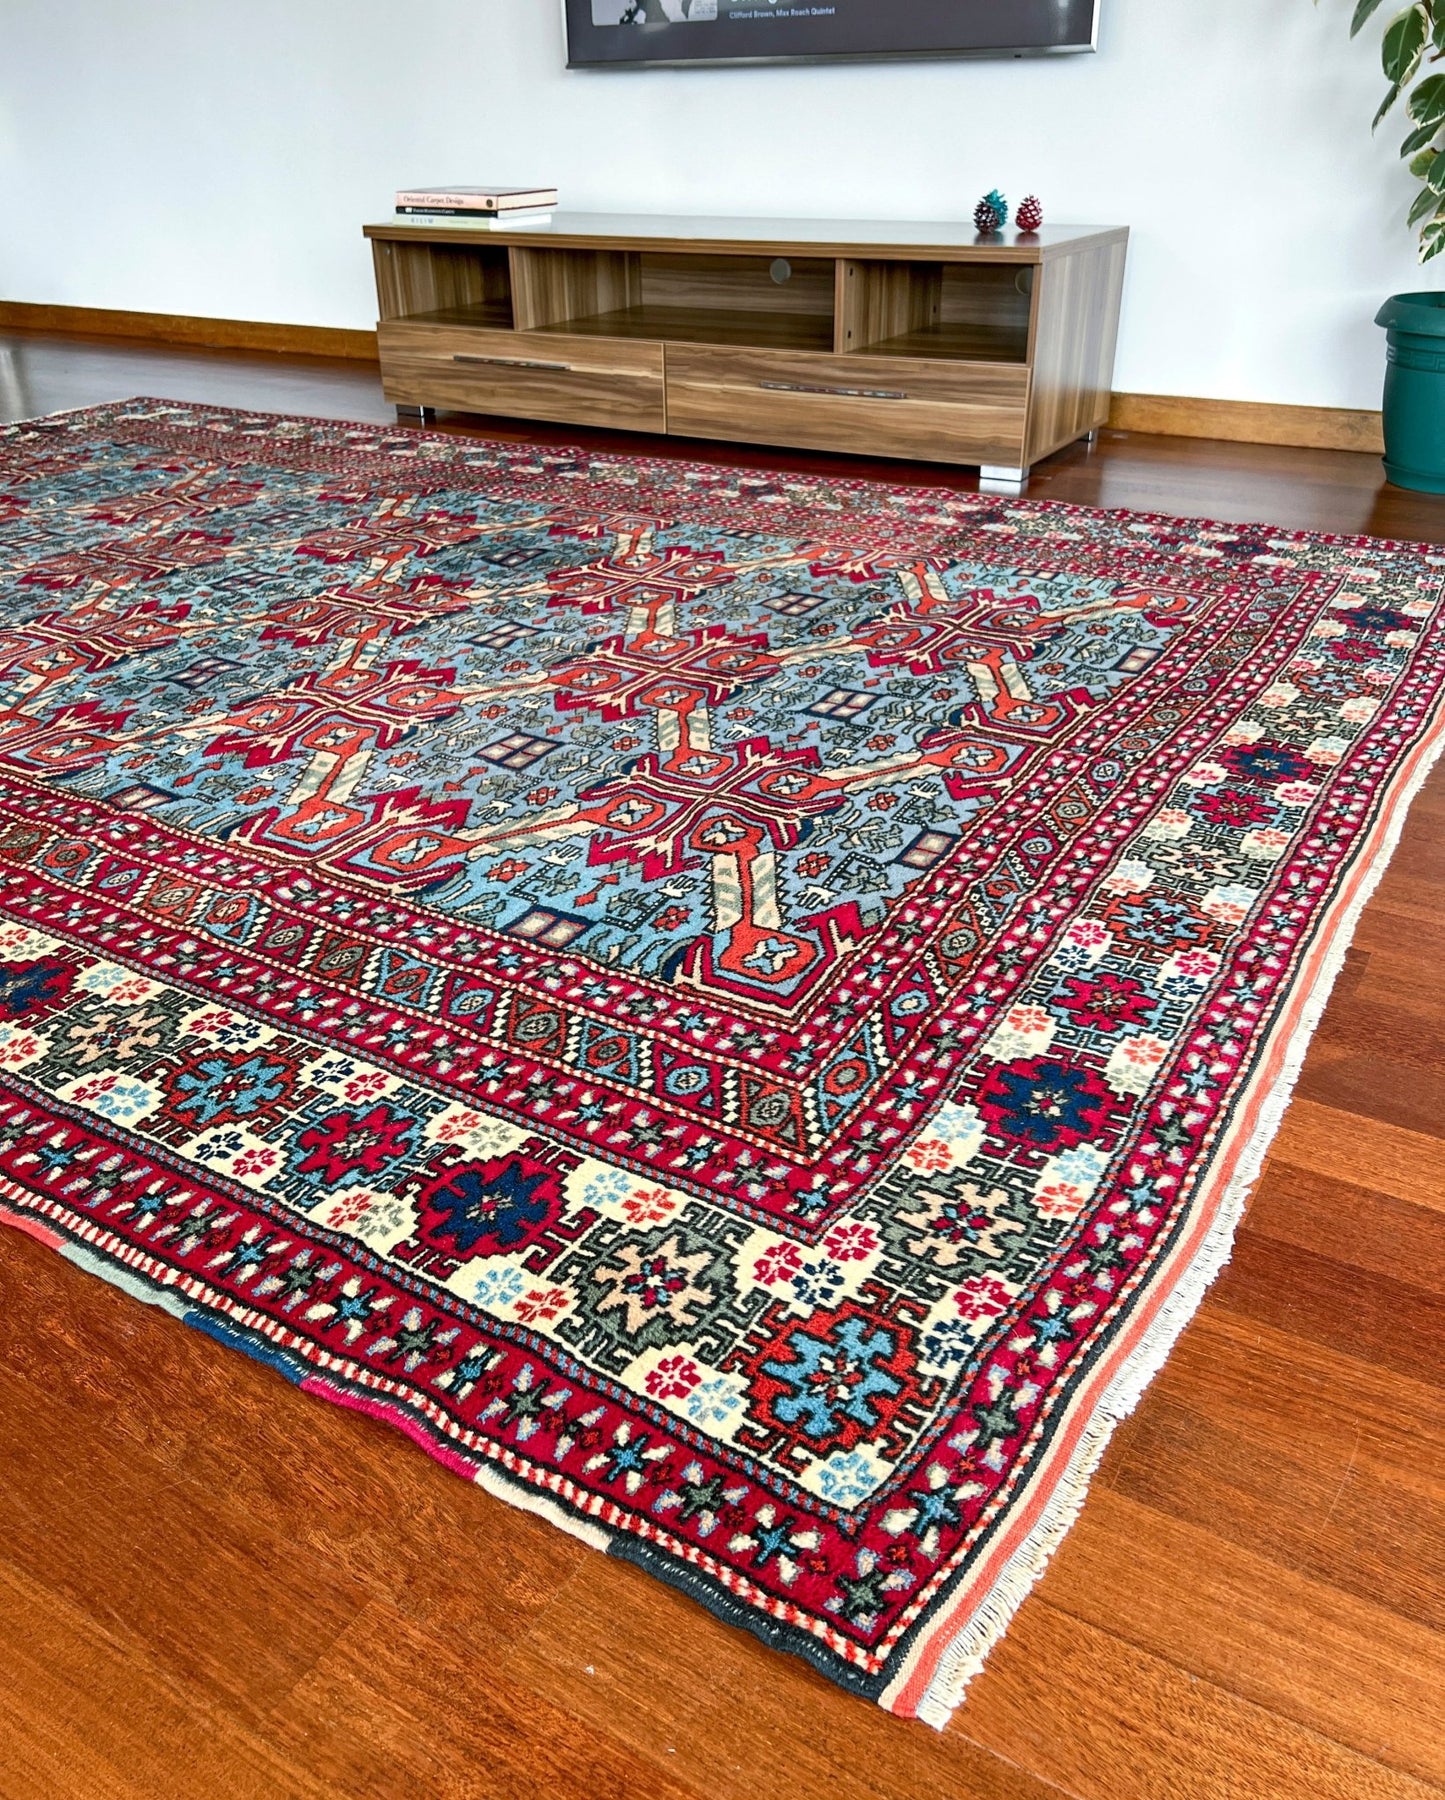 Yagcibedir large vintage turkish rug. Oriental rug shop palo alto berkeley san francisco bay area Buy rug online